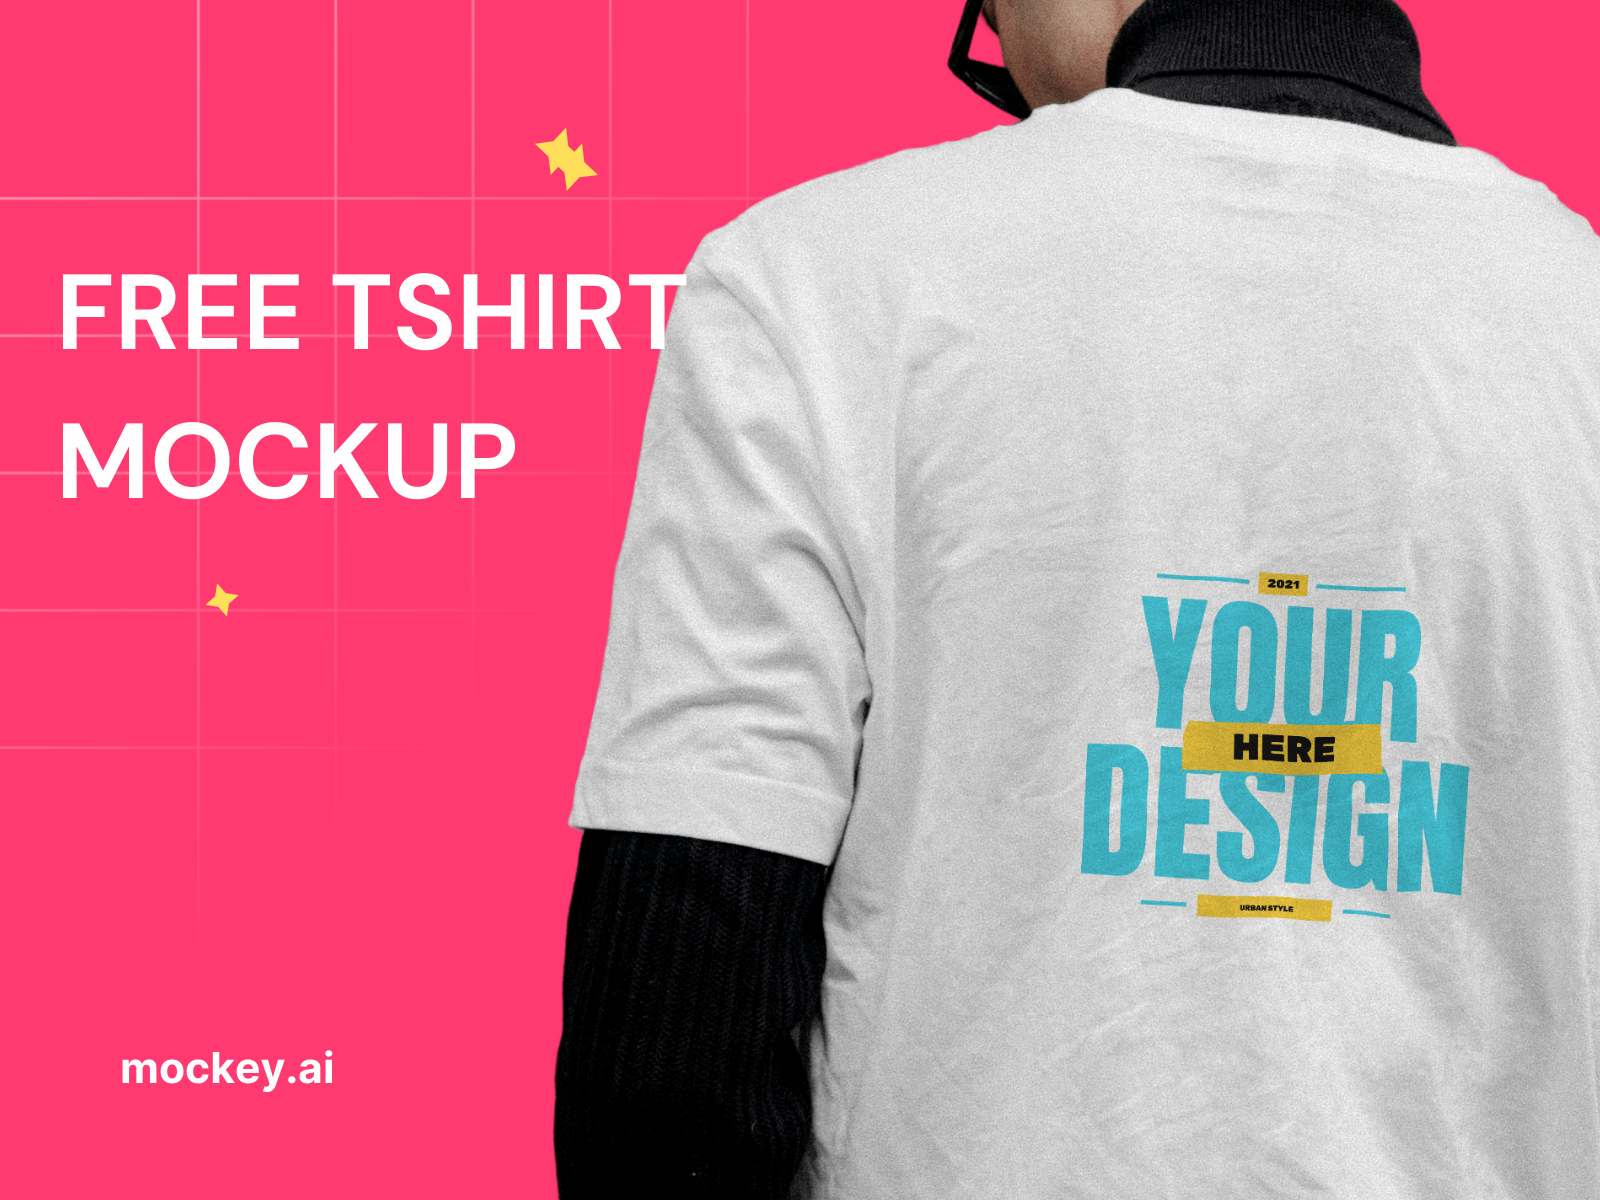 Free Back T-shirt mockup by mockey.ai on Dribbble